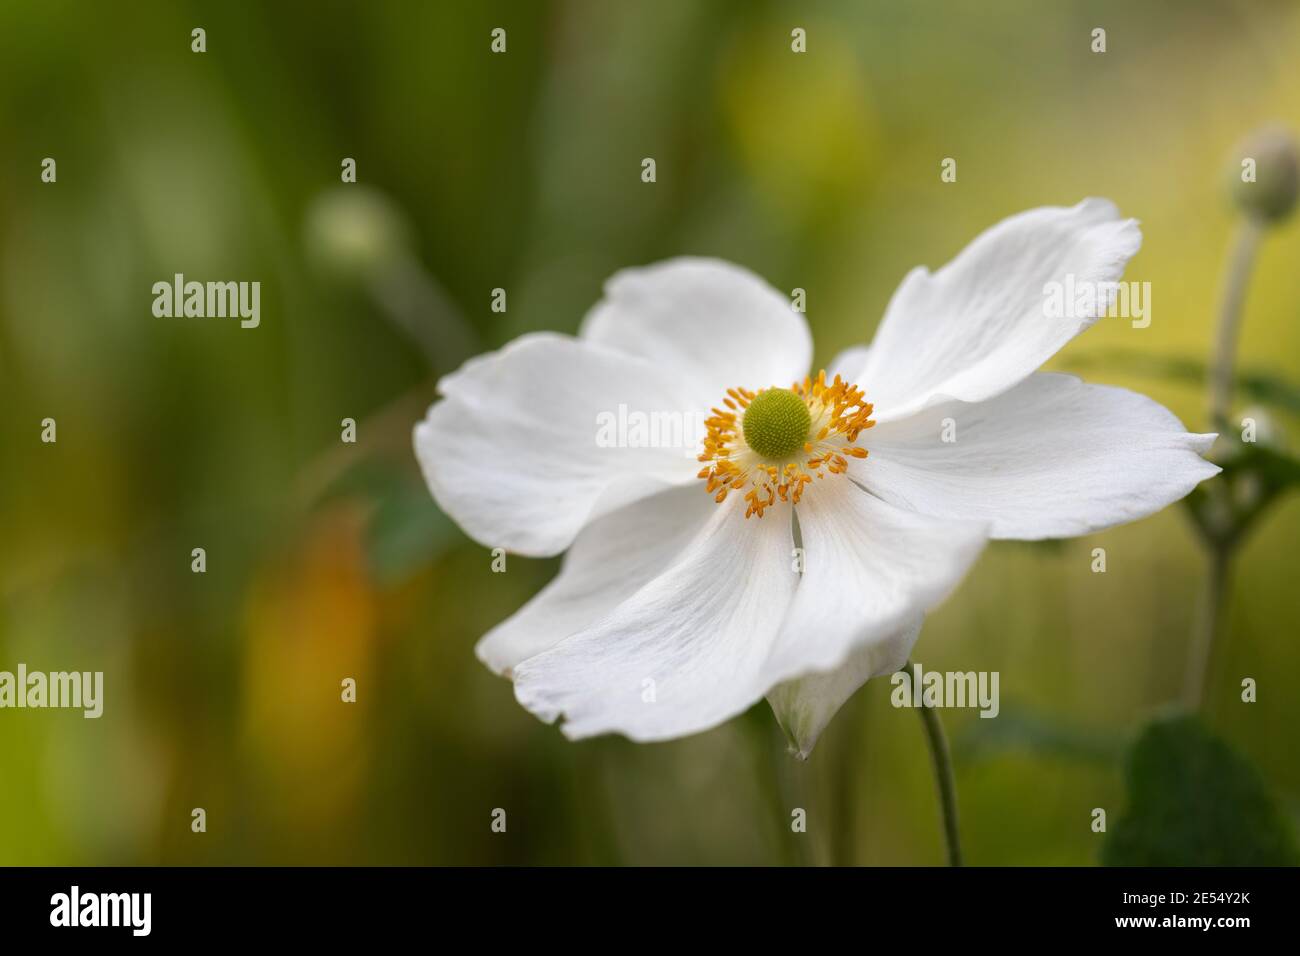 Close up of Anemone x hybrida 'Honorine Jobert' against a blurred green background, England, UK Stock Photo